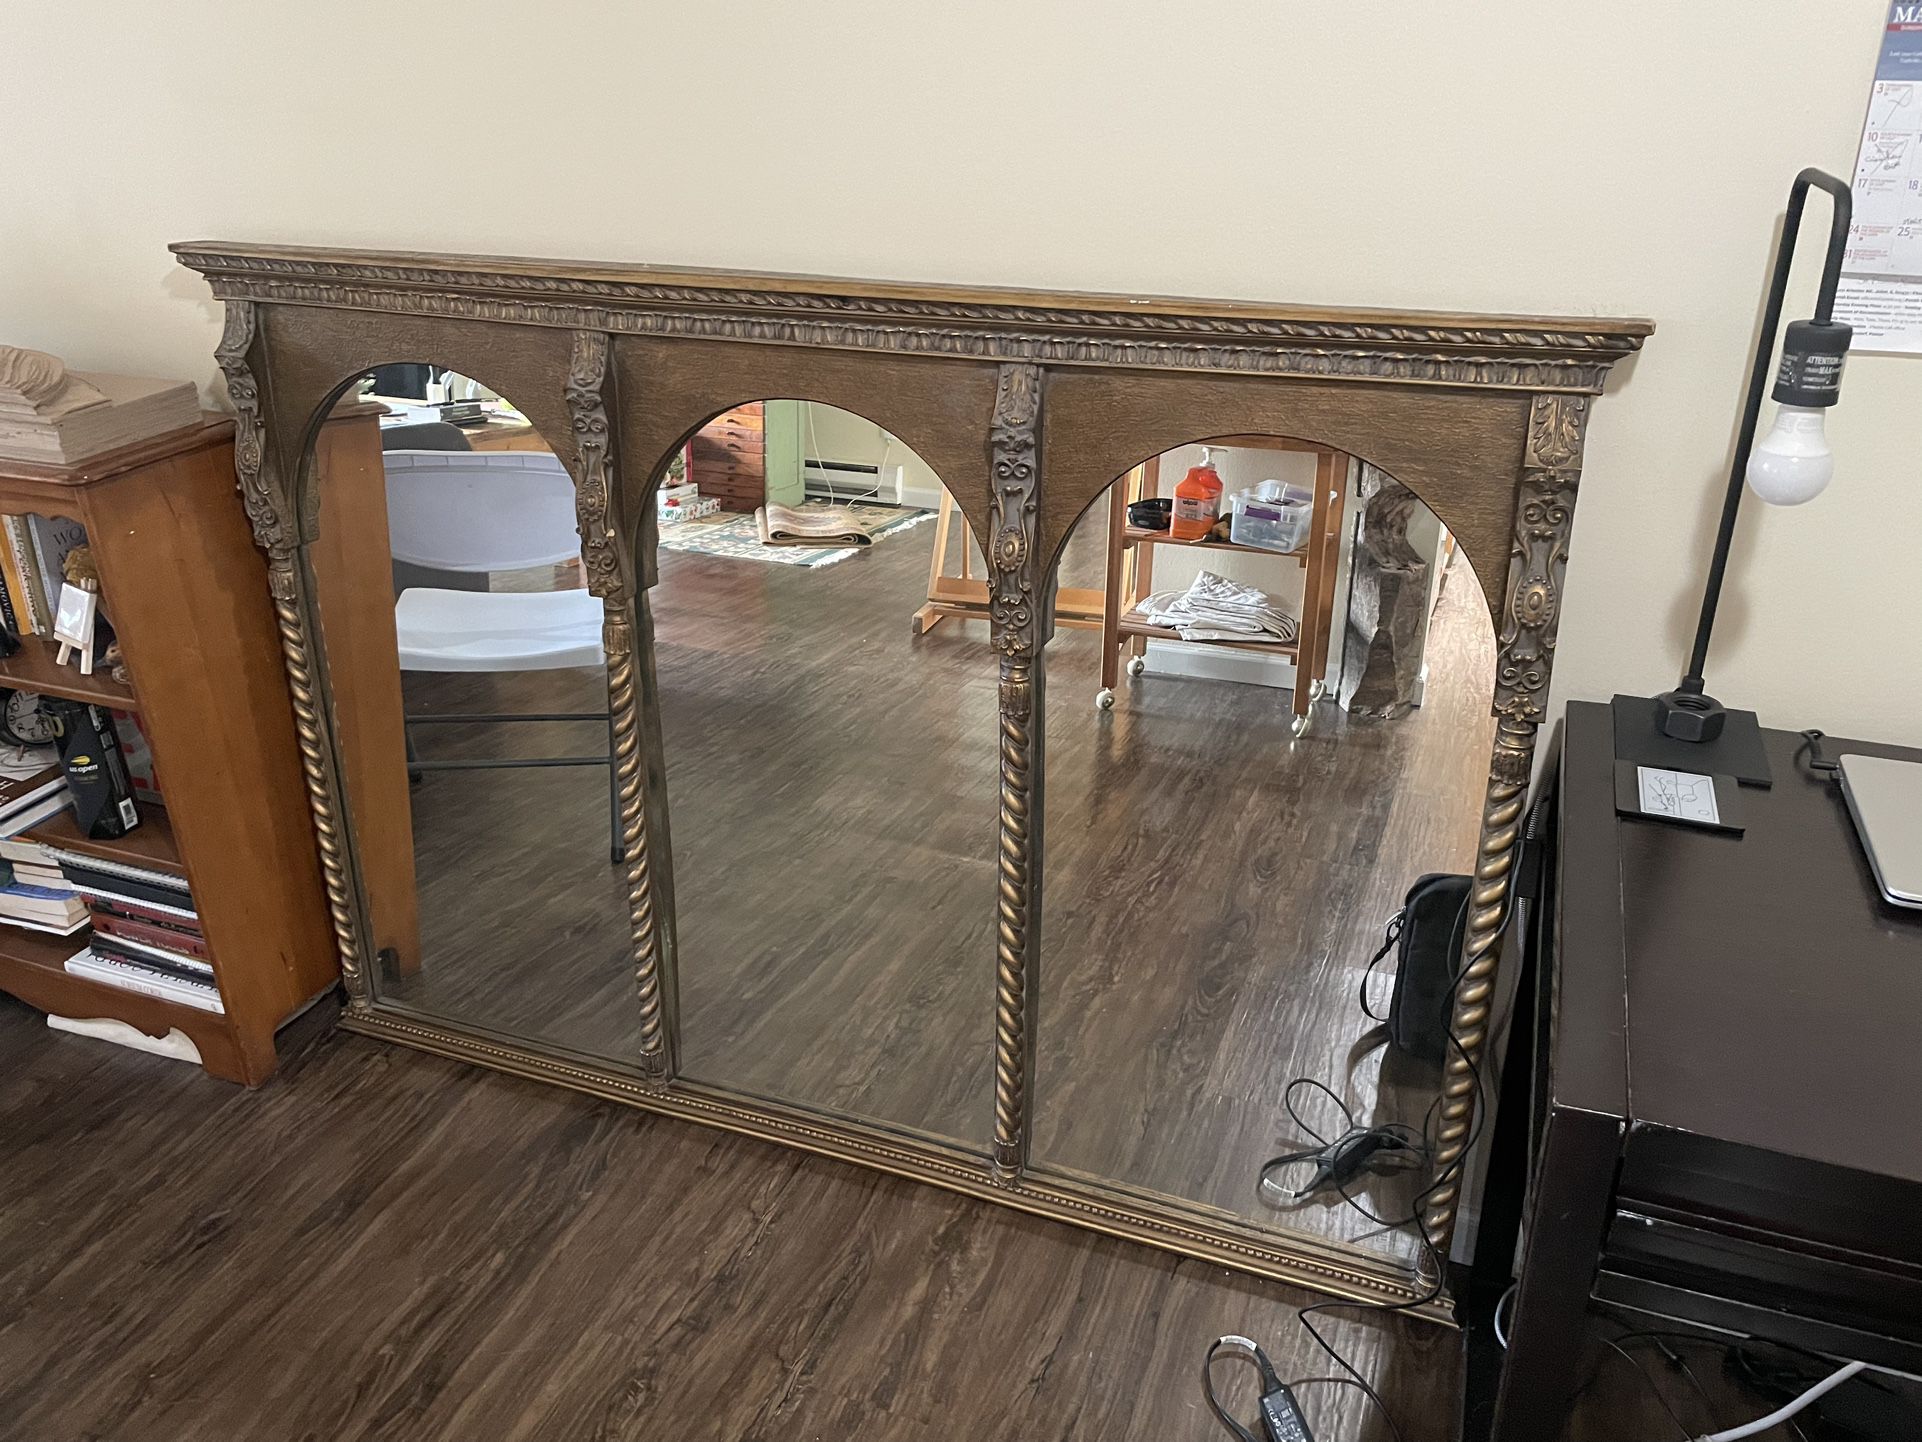 Triptych Mantel mirror